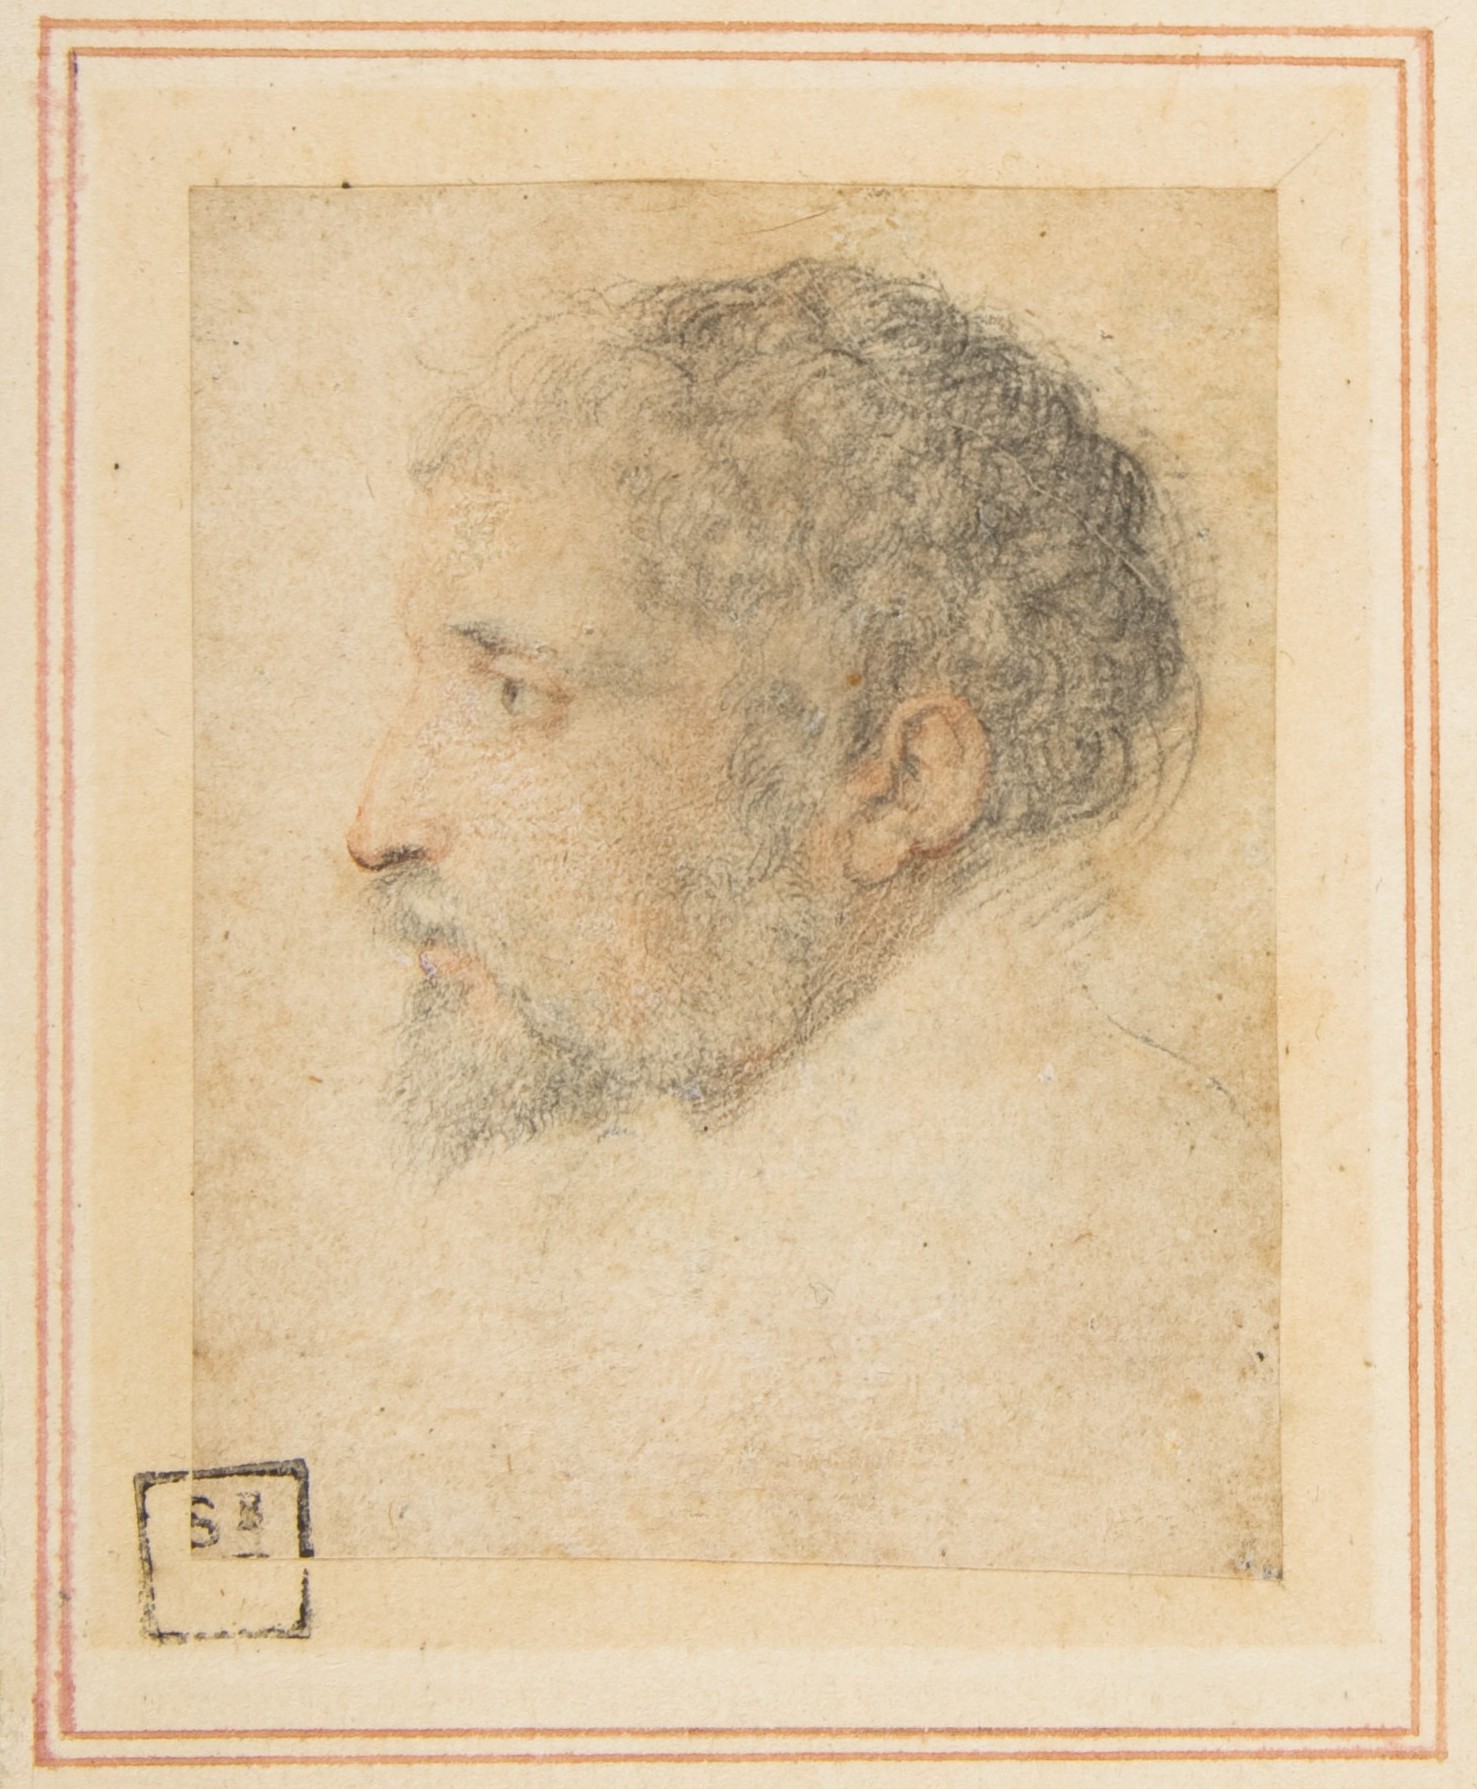 Parmigianino (Girolamo Francesco Maria Mazzola) Artworks collected in Metmuseum